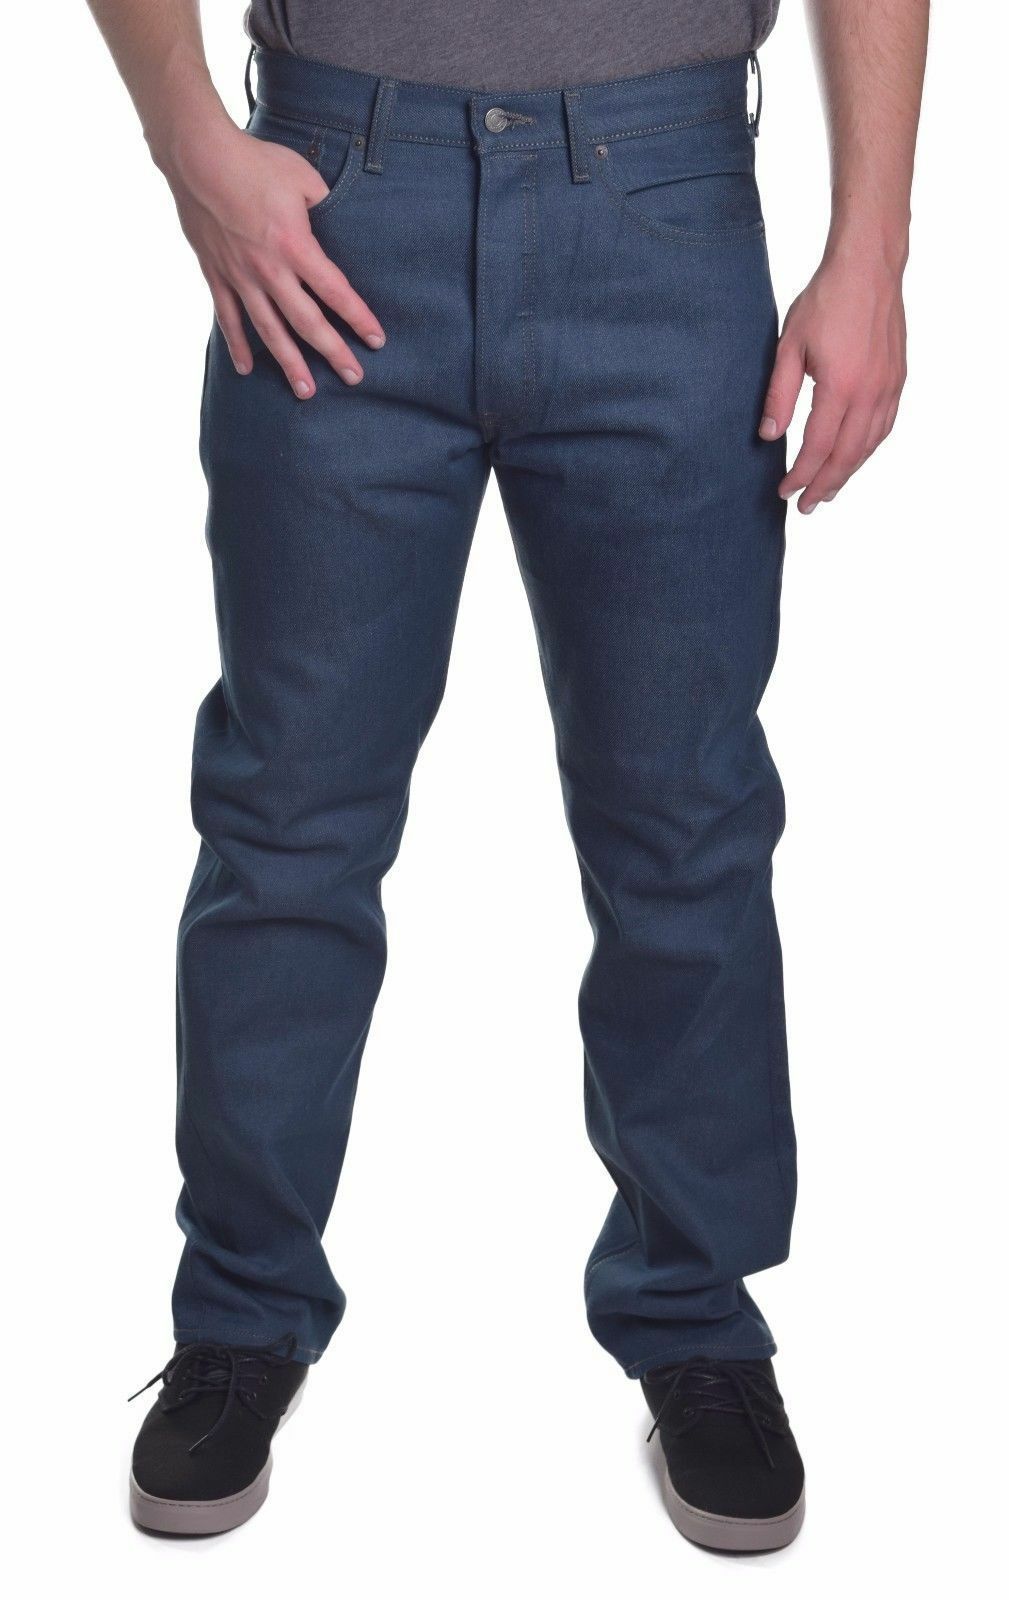 Levi's Men's 501 Jeans Twill Navy Blue W34 L26 34x26 1586 - Jeans